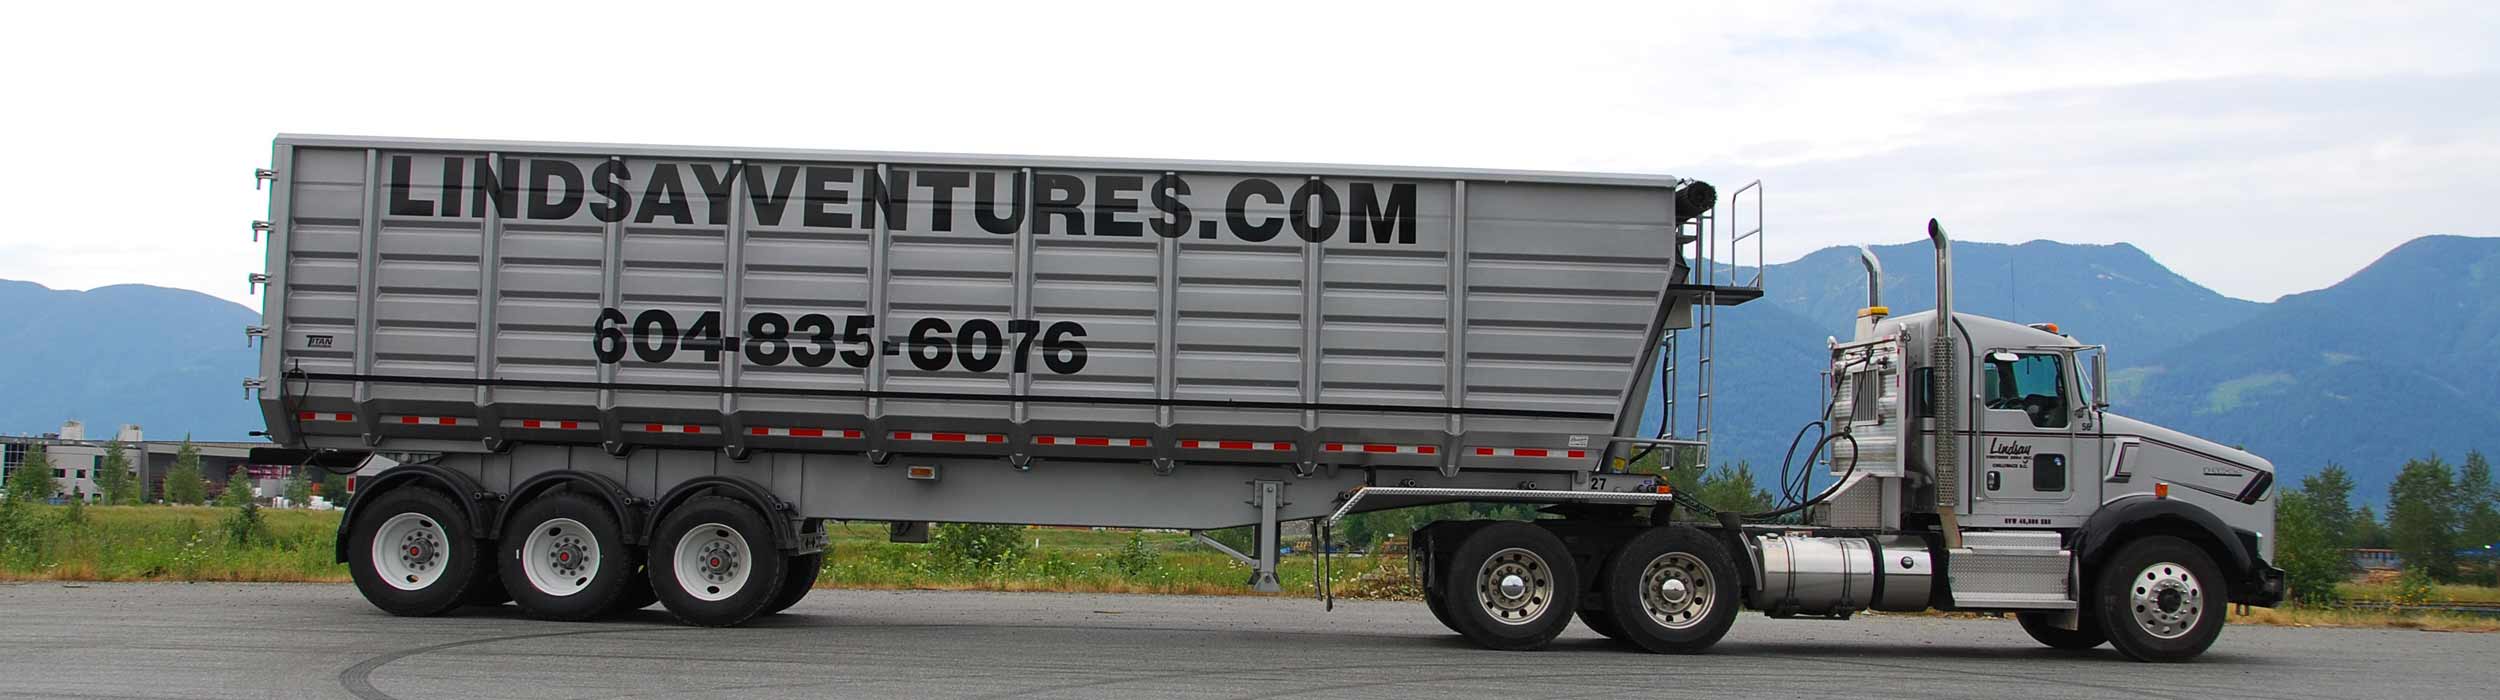 Lindsay Ventures hauling truck